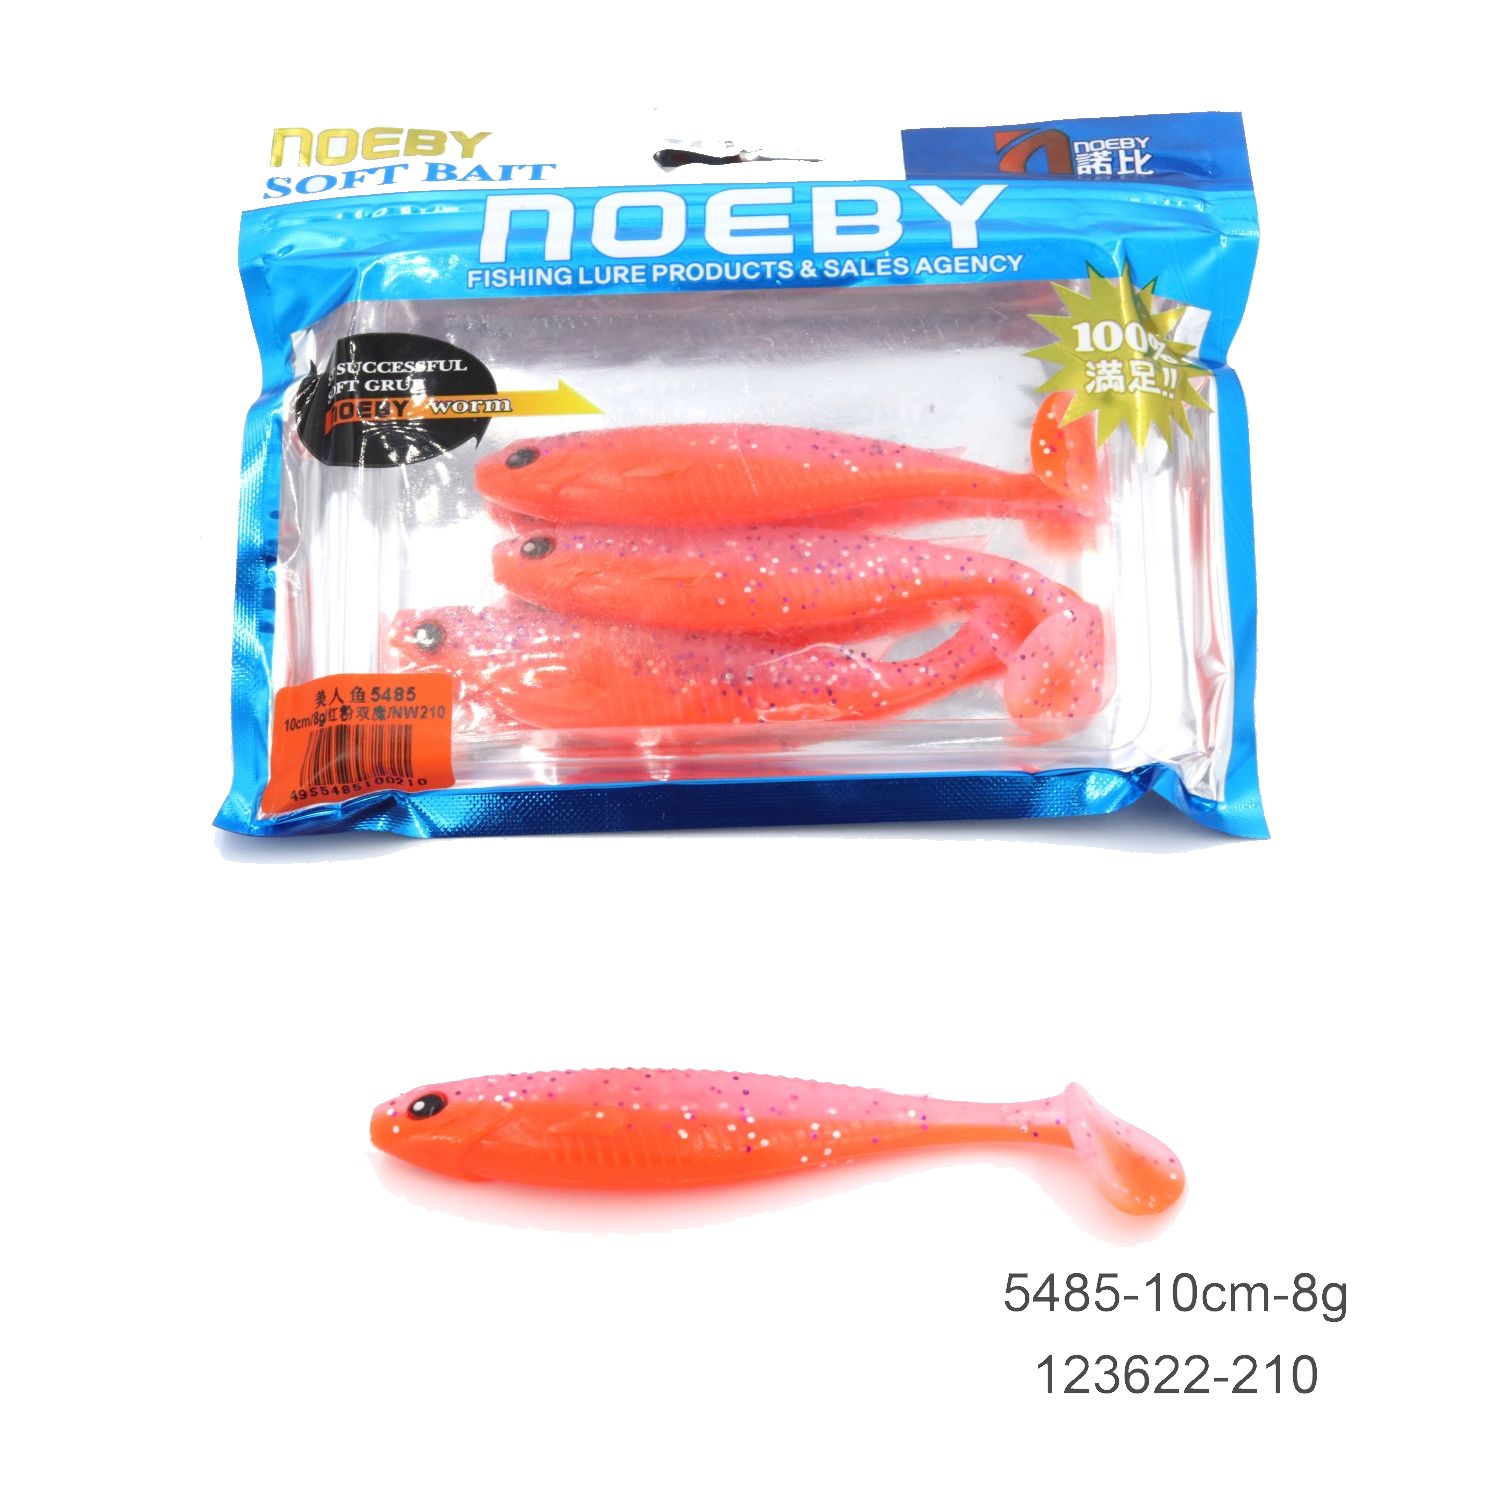 noeby soft plastic lure bass fish-8g